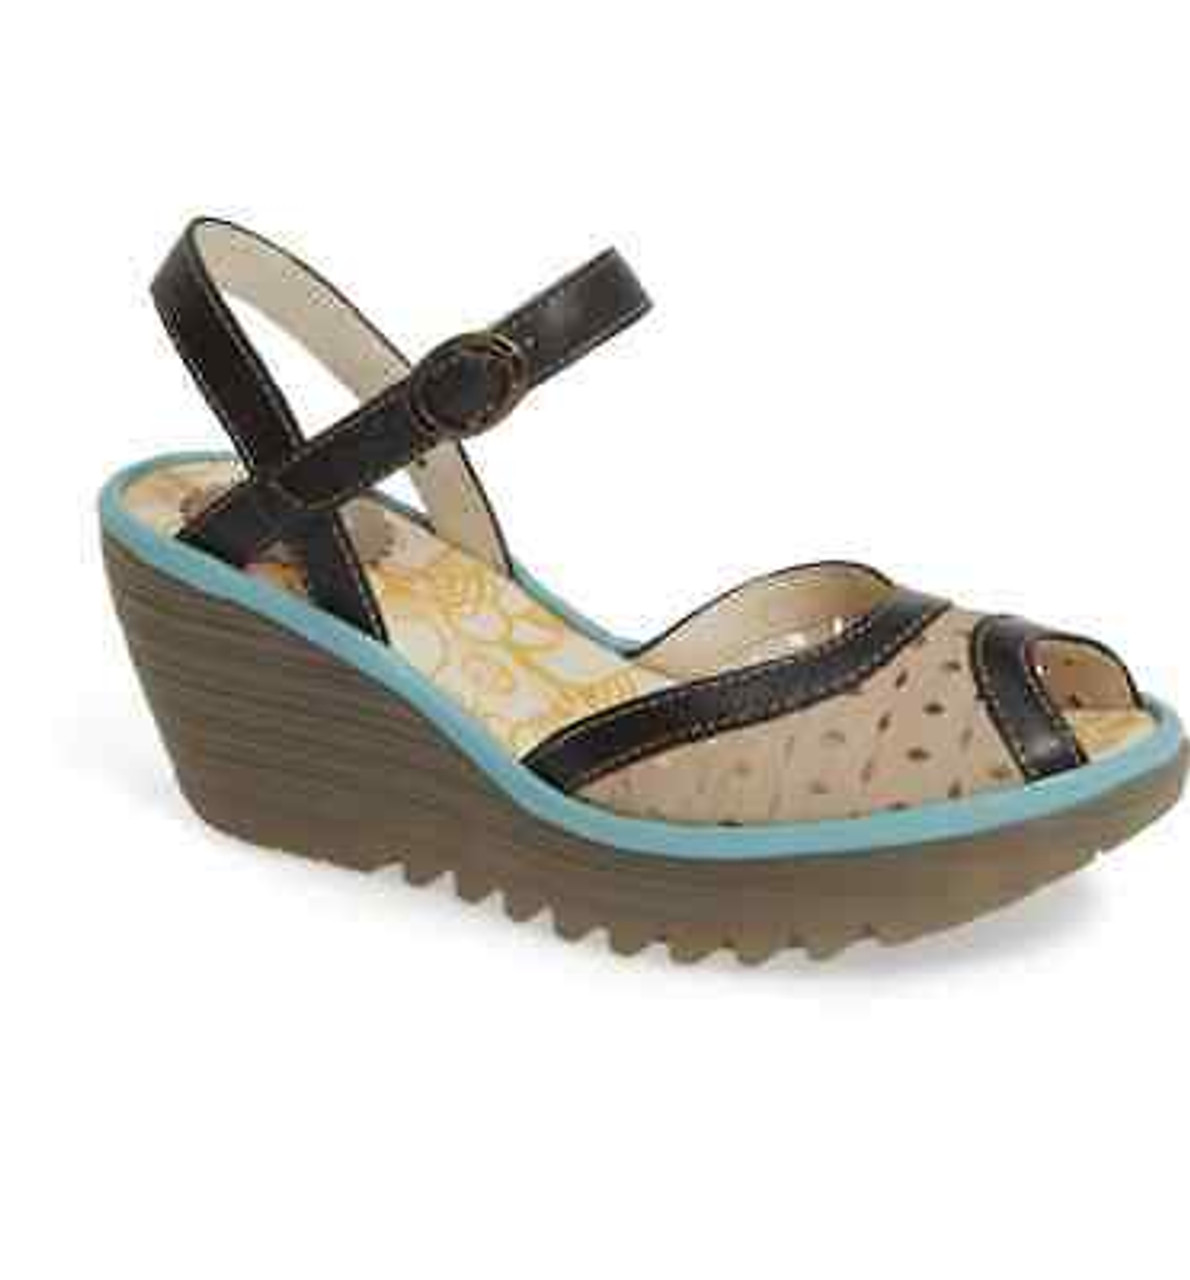 Fly London Women's Black Wedge sandals UK size 38/US size 5